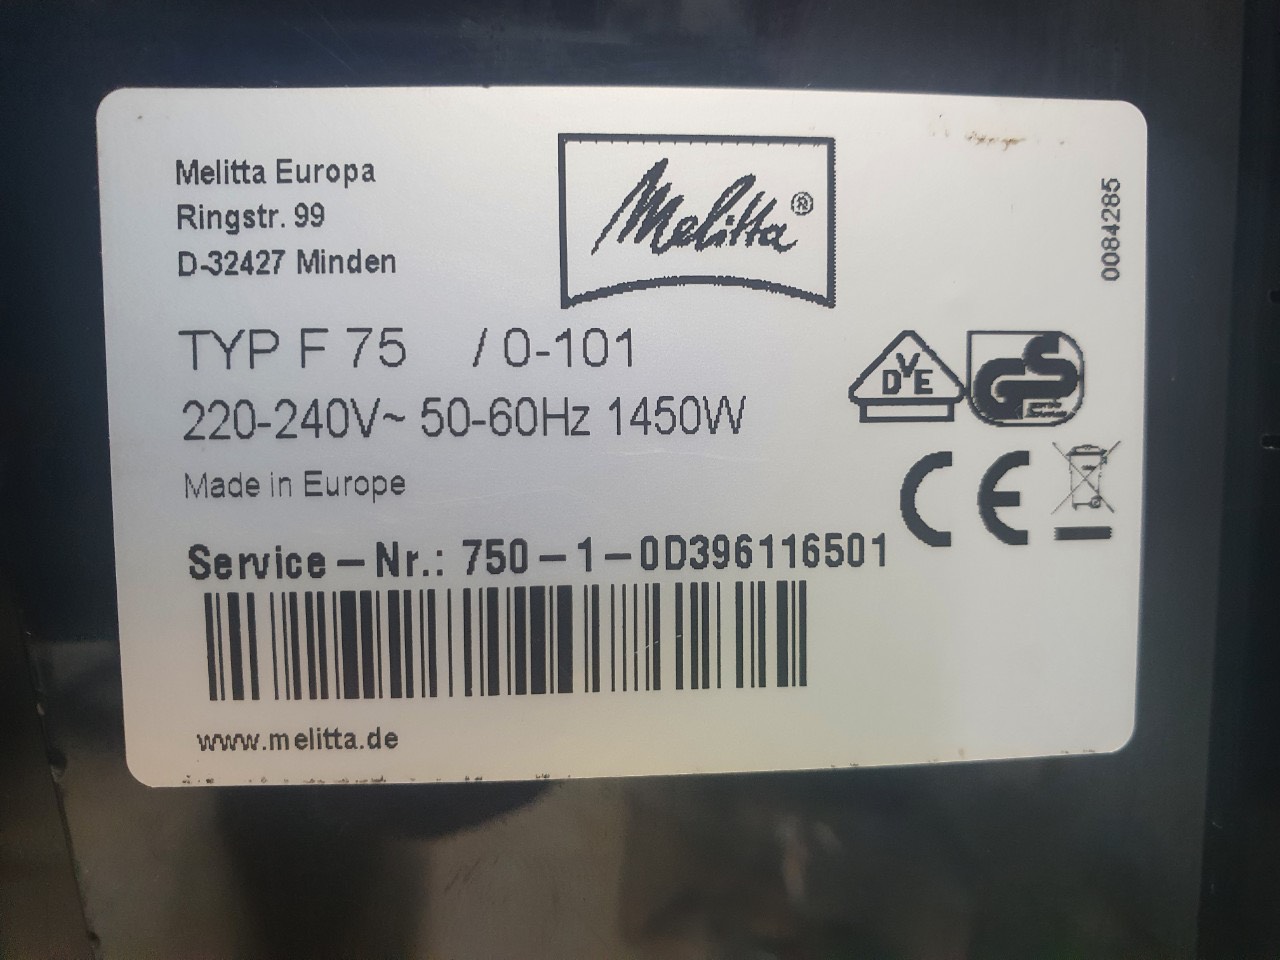 z5377572109596 dd785777b3b7187df28102010a6ce361 - Các lỗi phổ biến trên máy cafe Melitta 